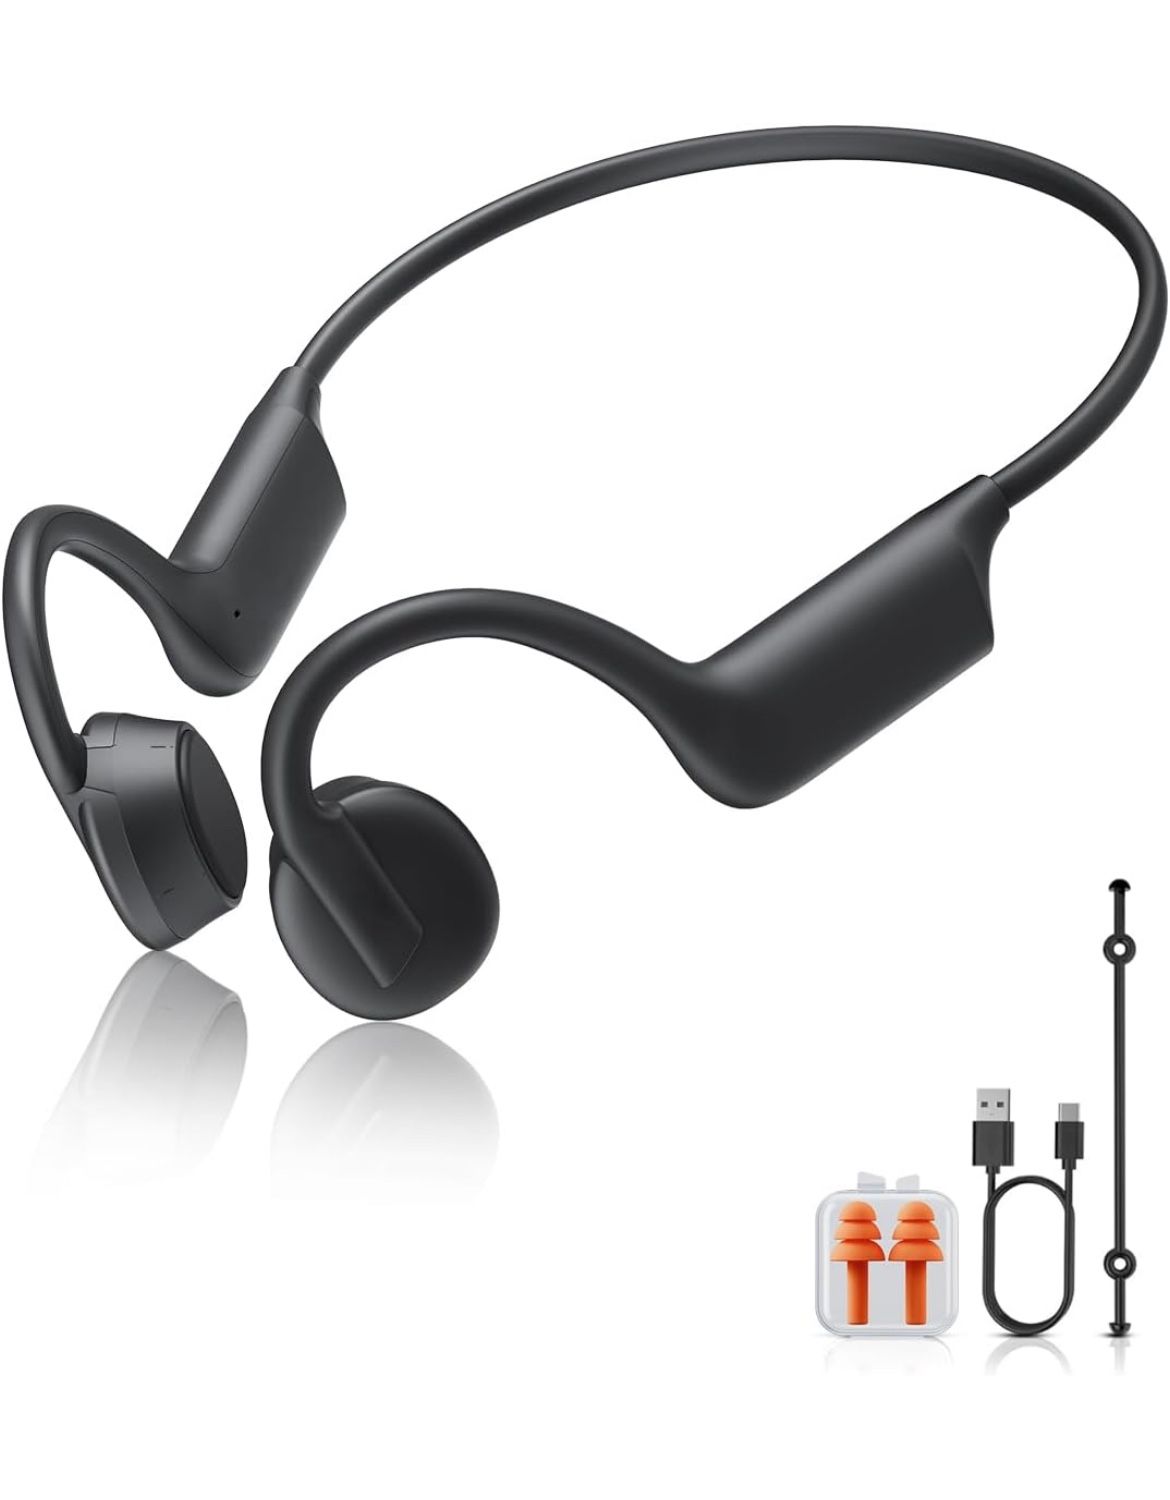 Bone Conduction Headphones Lightweight Open Ear Headphones Sport Headphones with Built-in Mic Extra Comfort IPX5 Waterproof Headset for Running,Cyclin